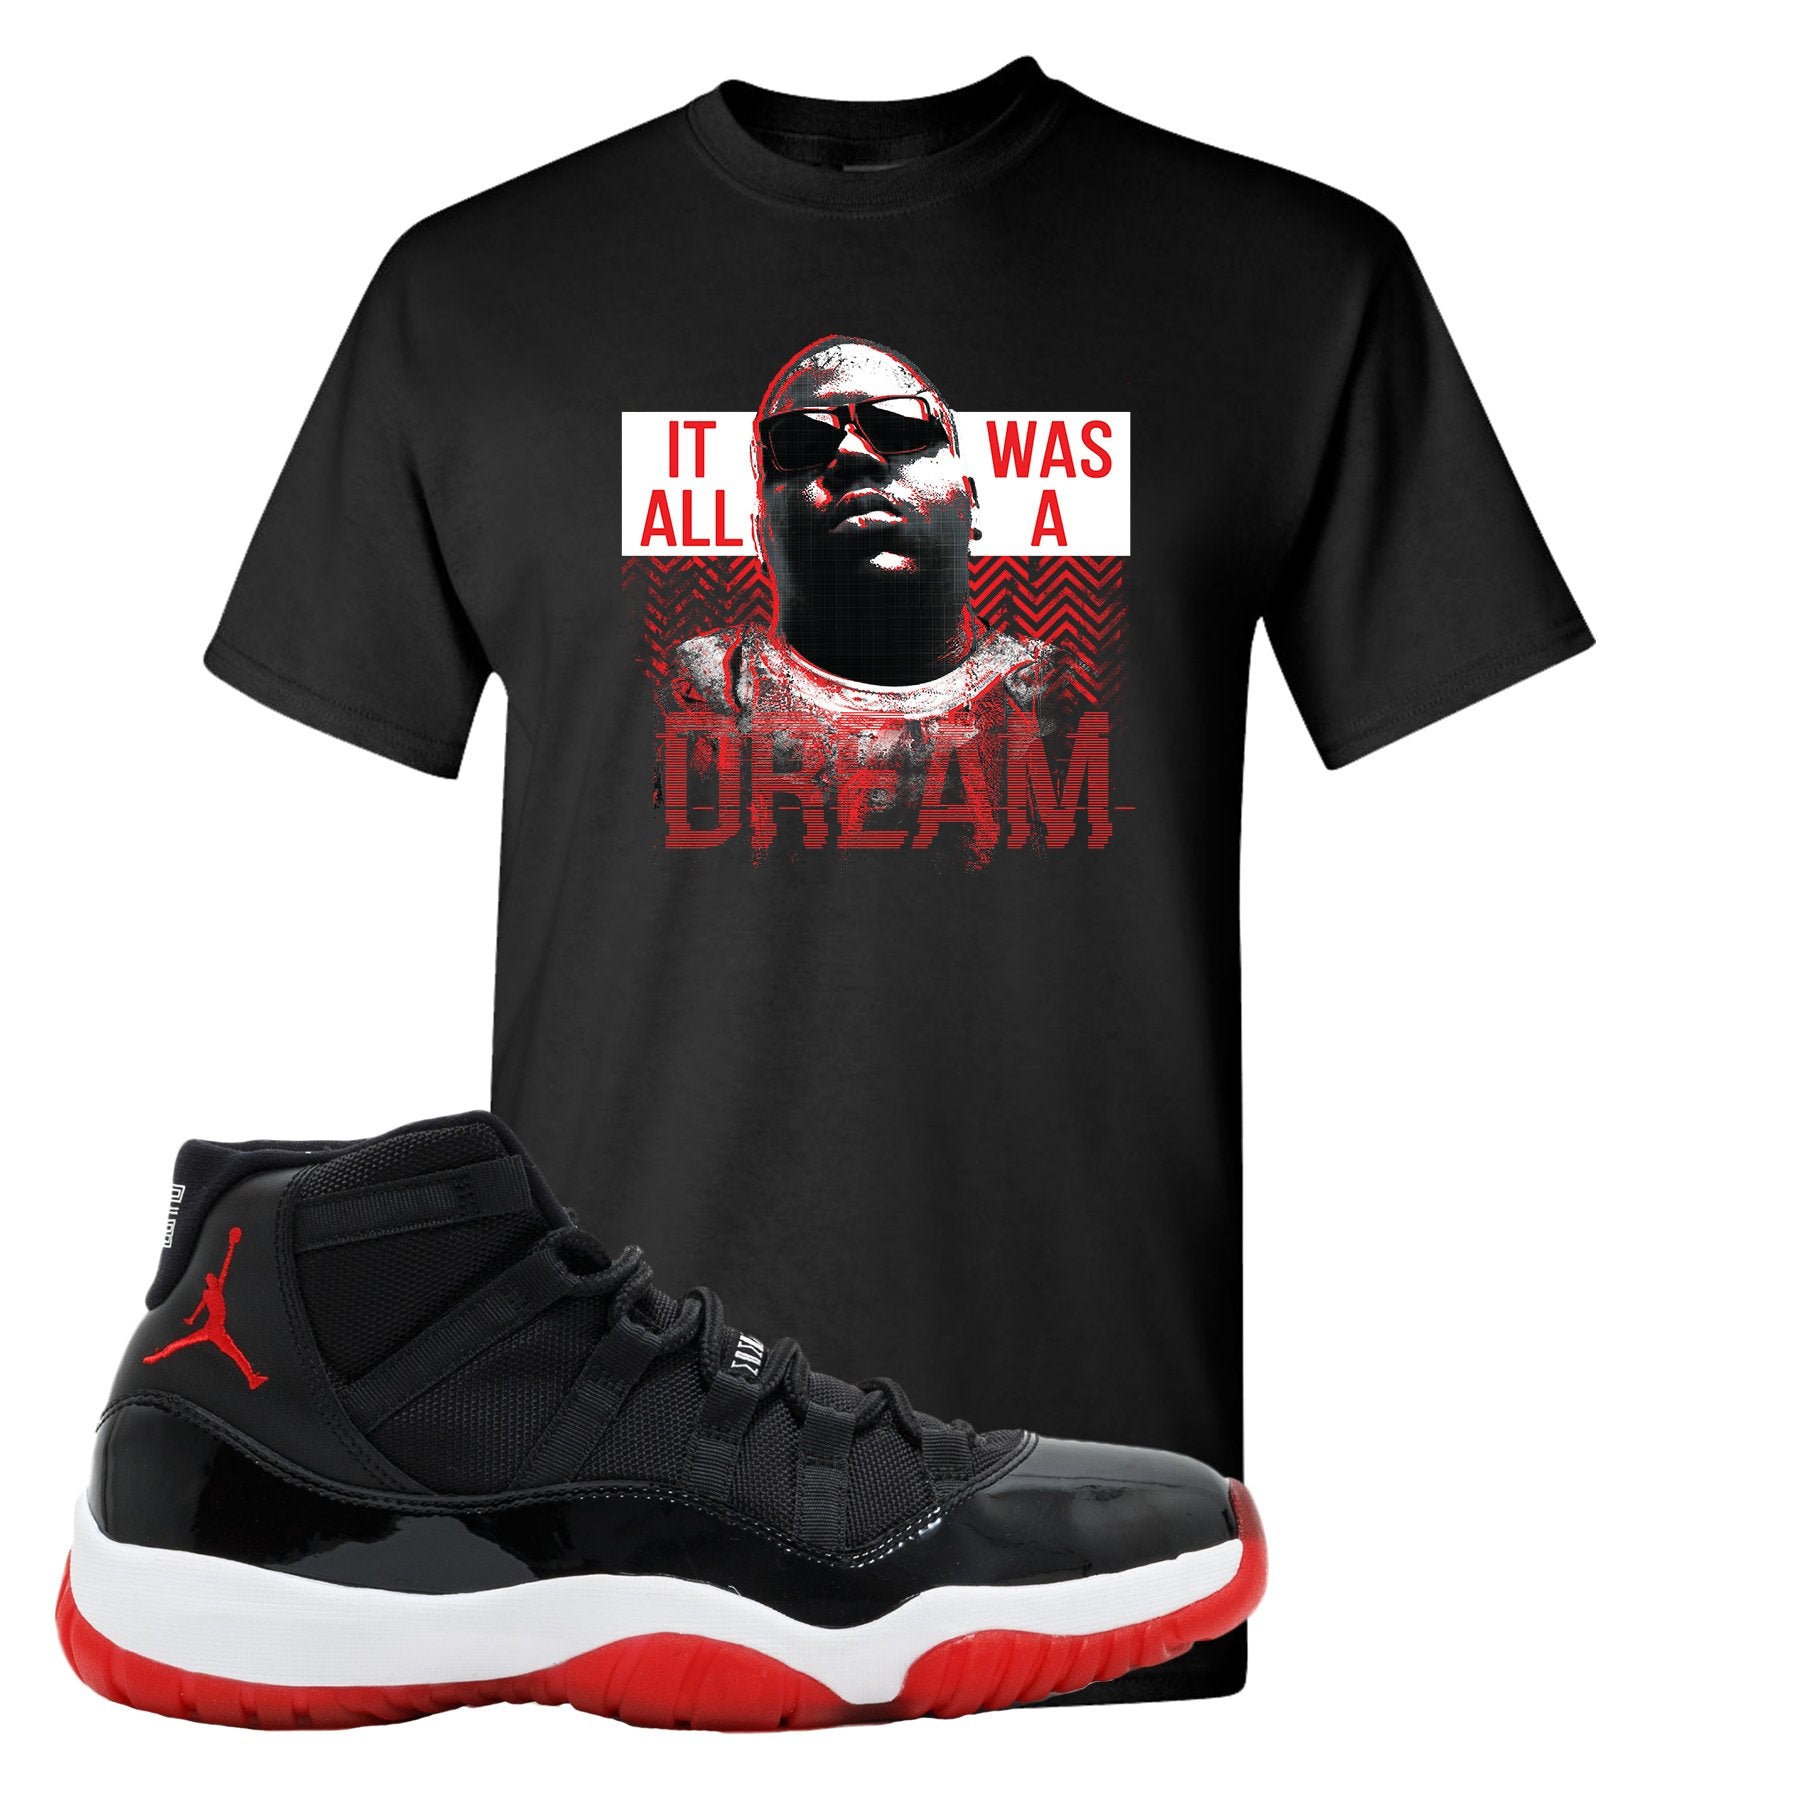 Jordan 11 Bred It Was All A Dream Black Sneaker Hook Up T-Shirt